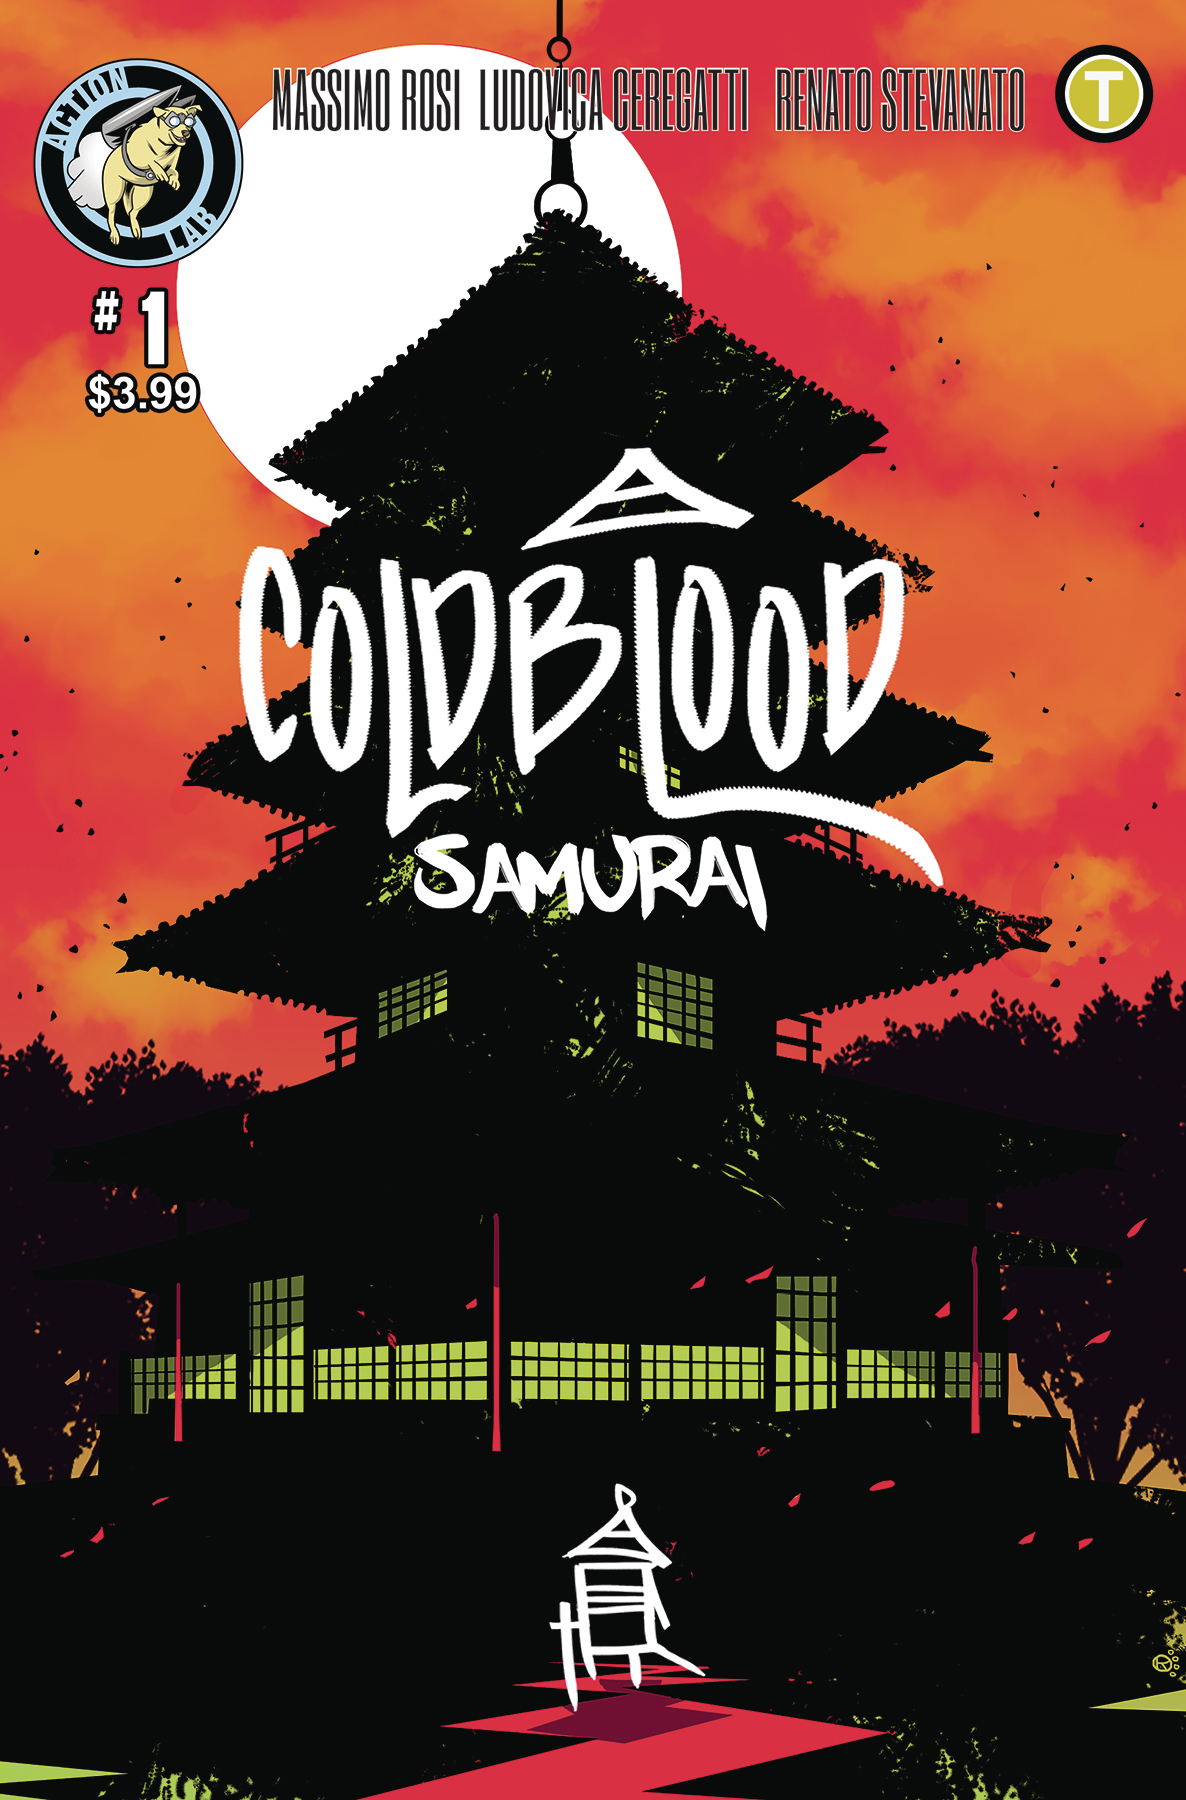 Cold Blood Samurai (2019) Complete Bundle - Used